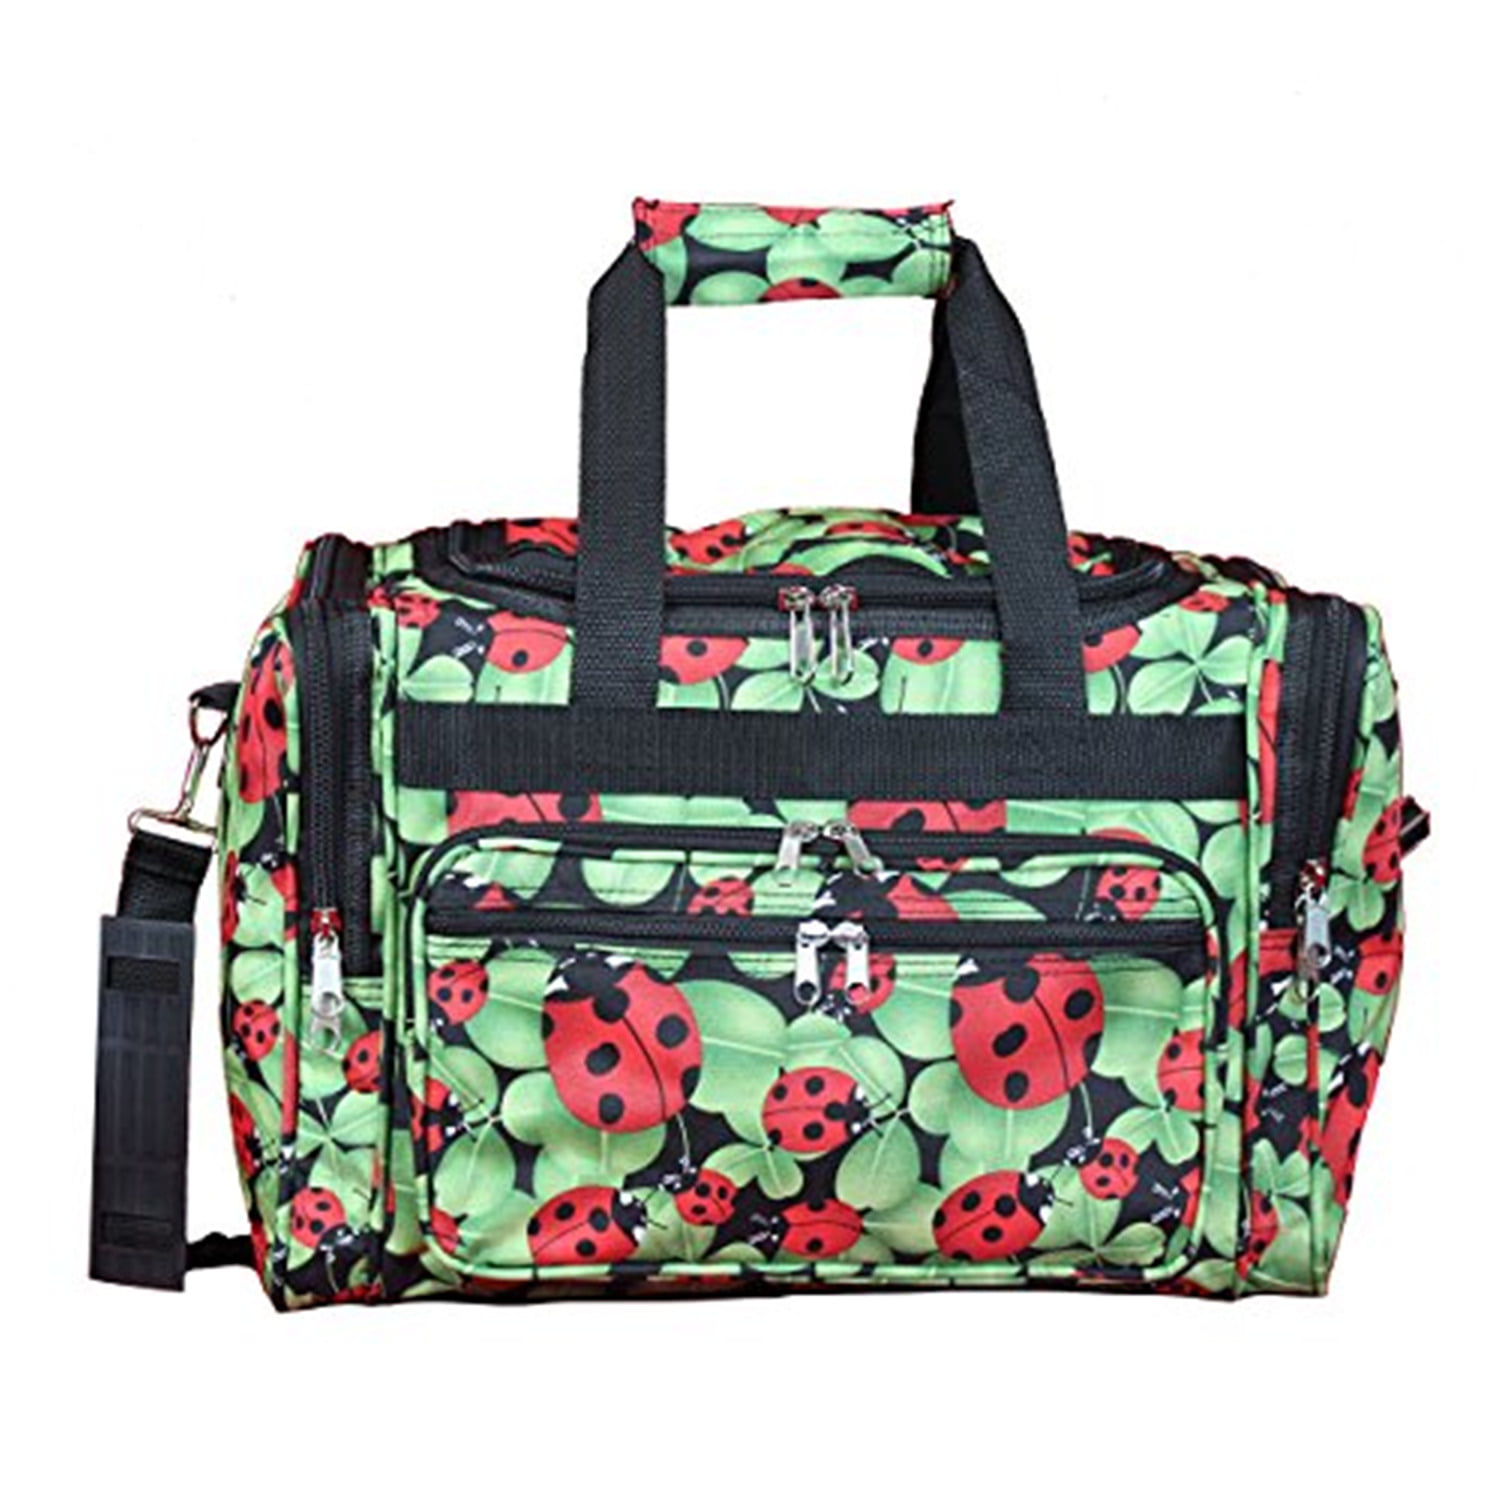 World Traveler 16-inch Carry-On Duffel Bag - Lady Bug - Walmart.com